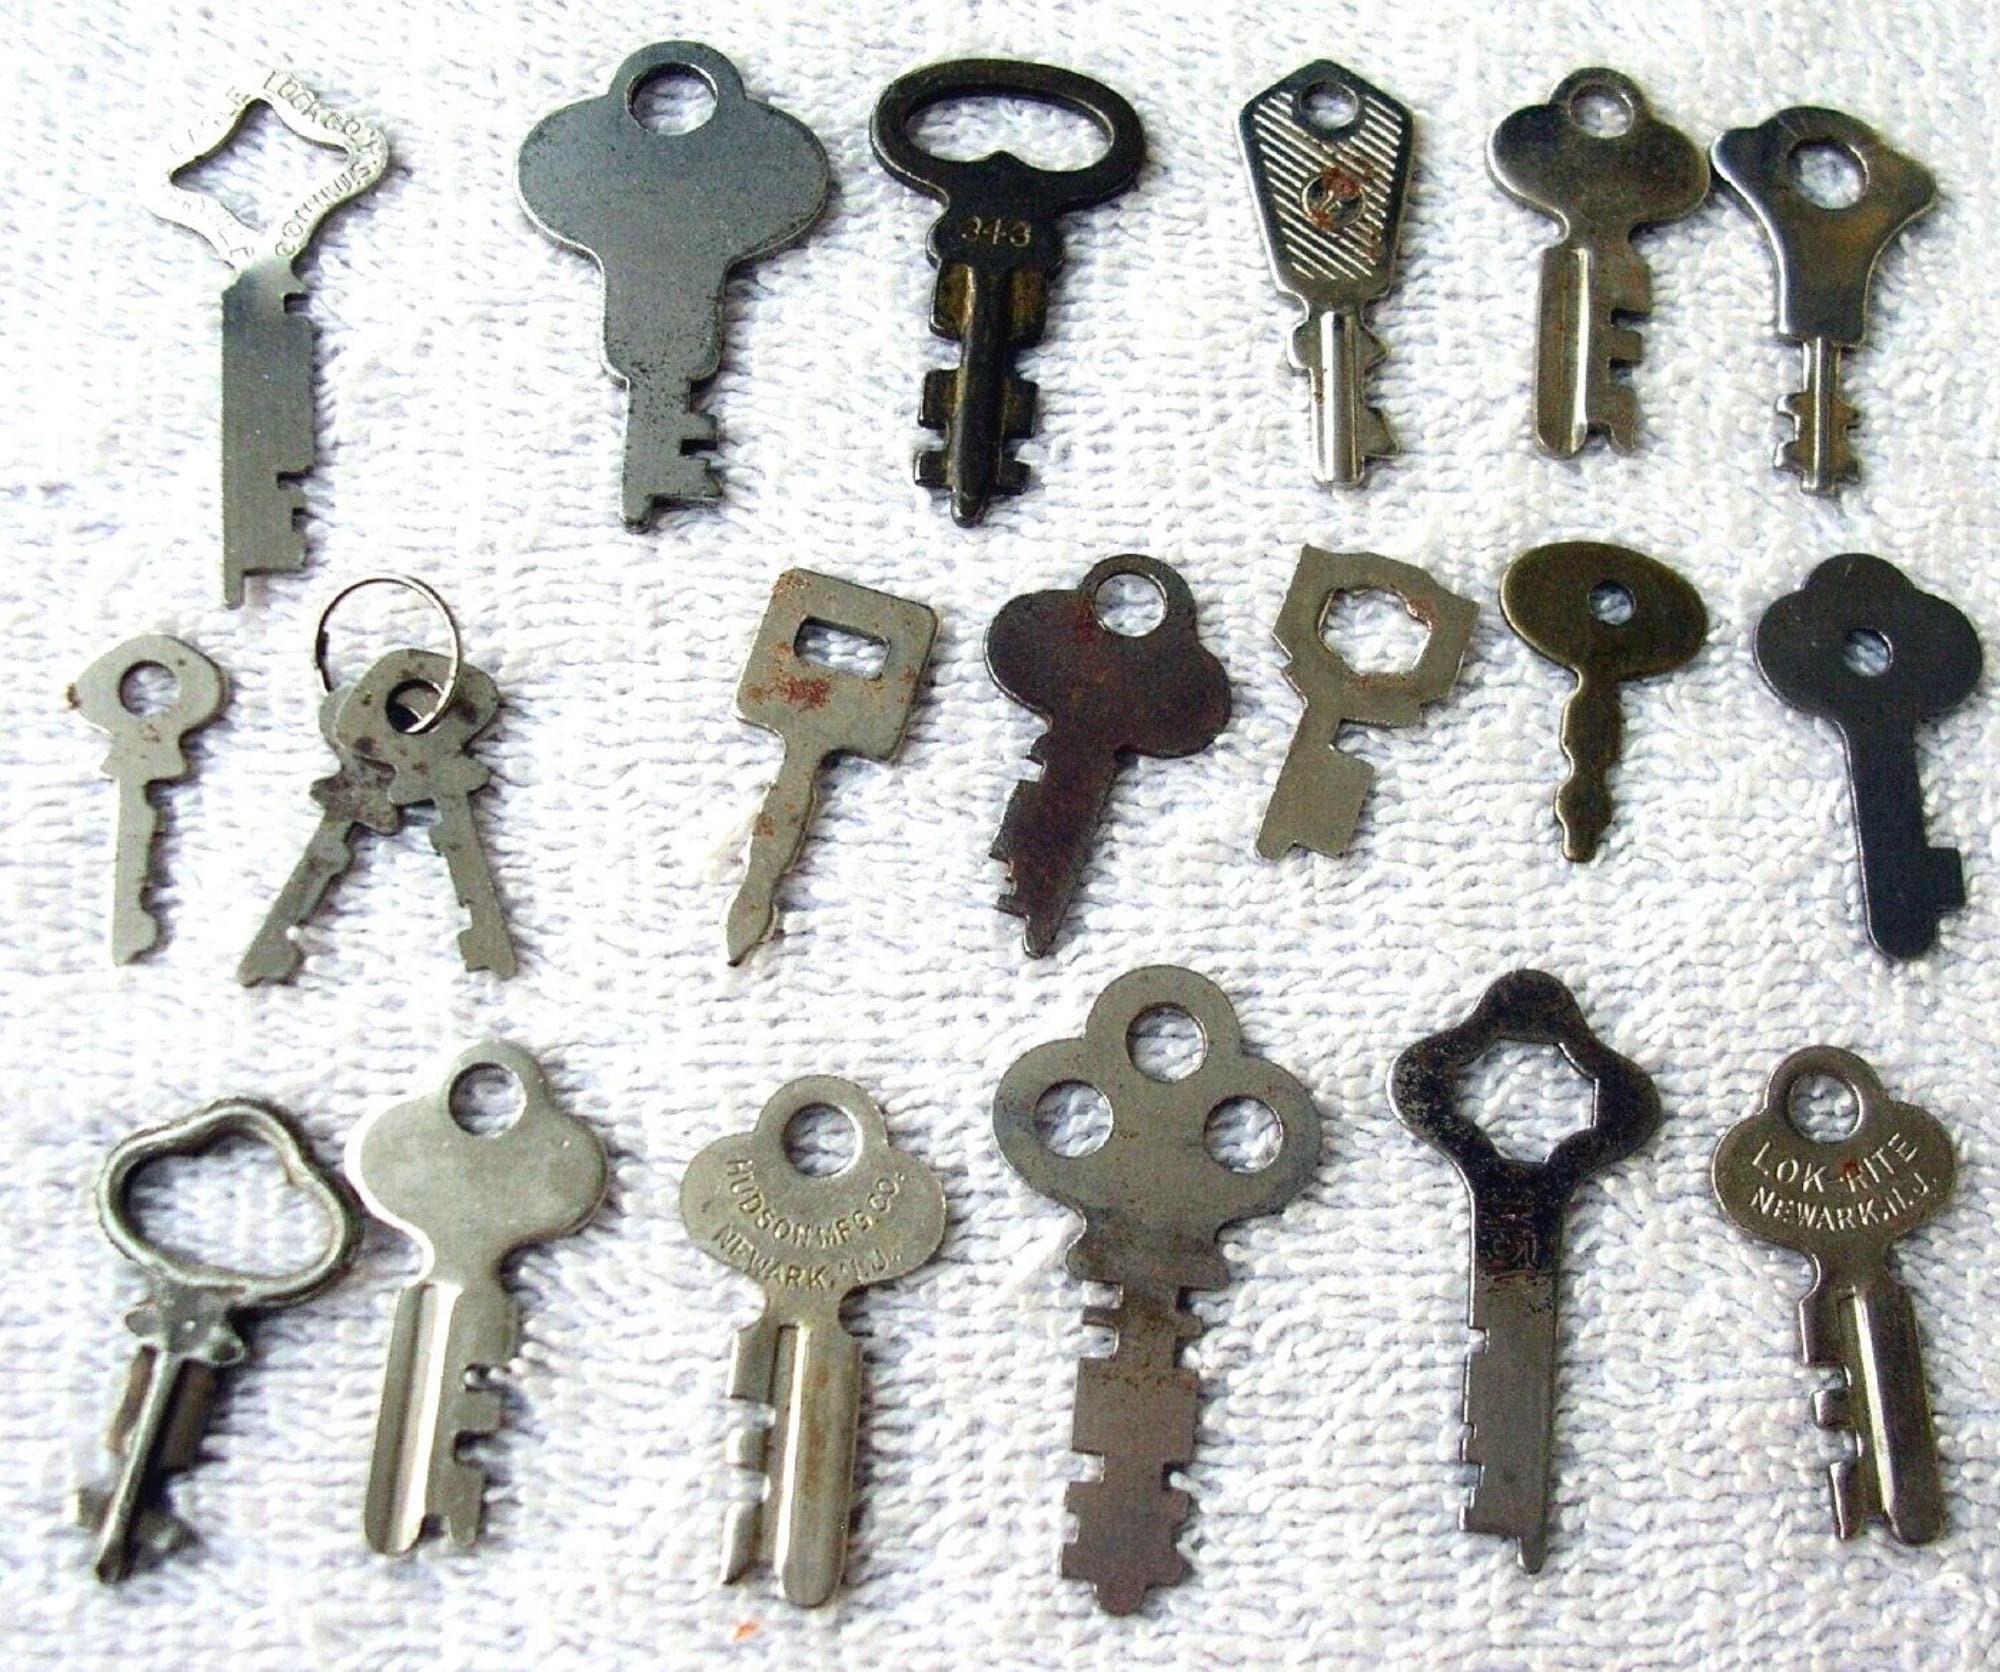 Vintage Trunk Lock Lot- 34 locks, keys-various types of locks